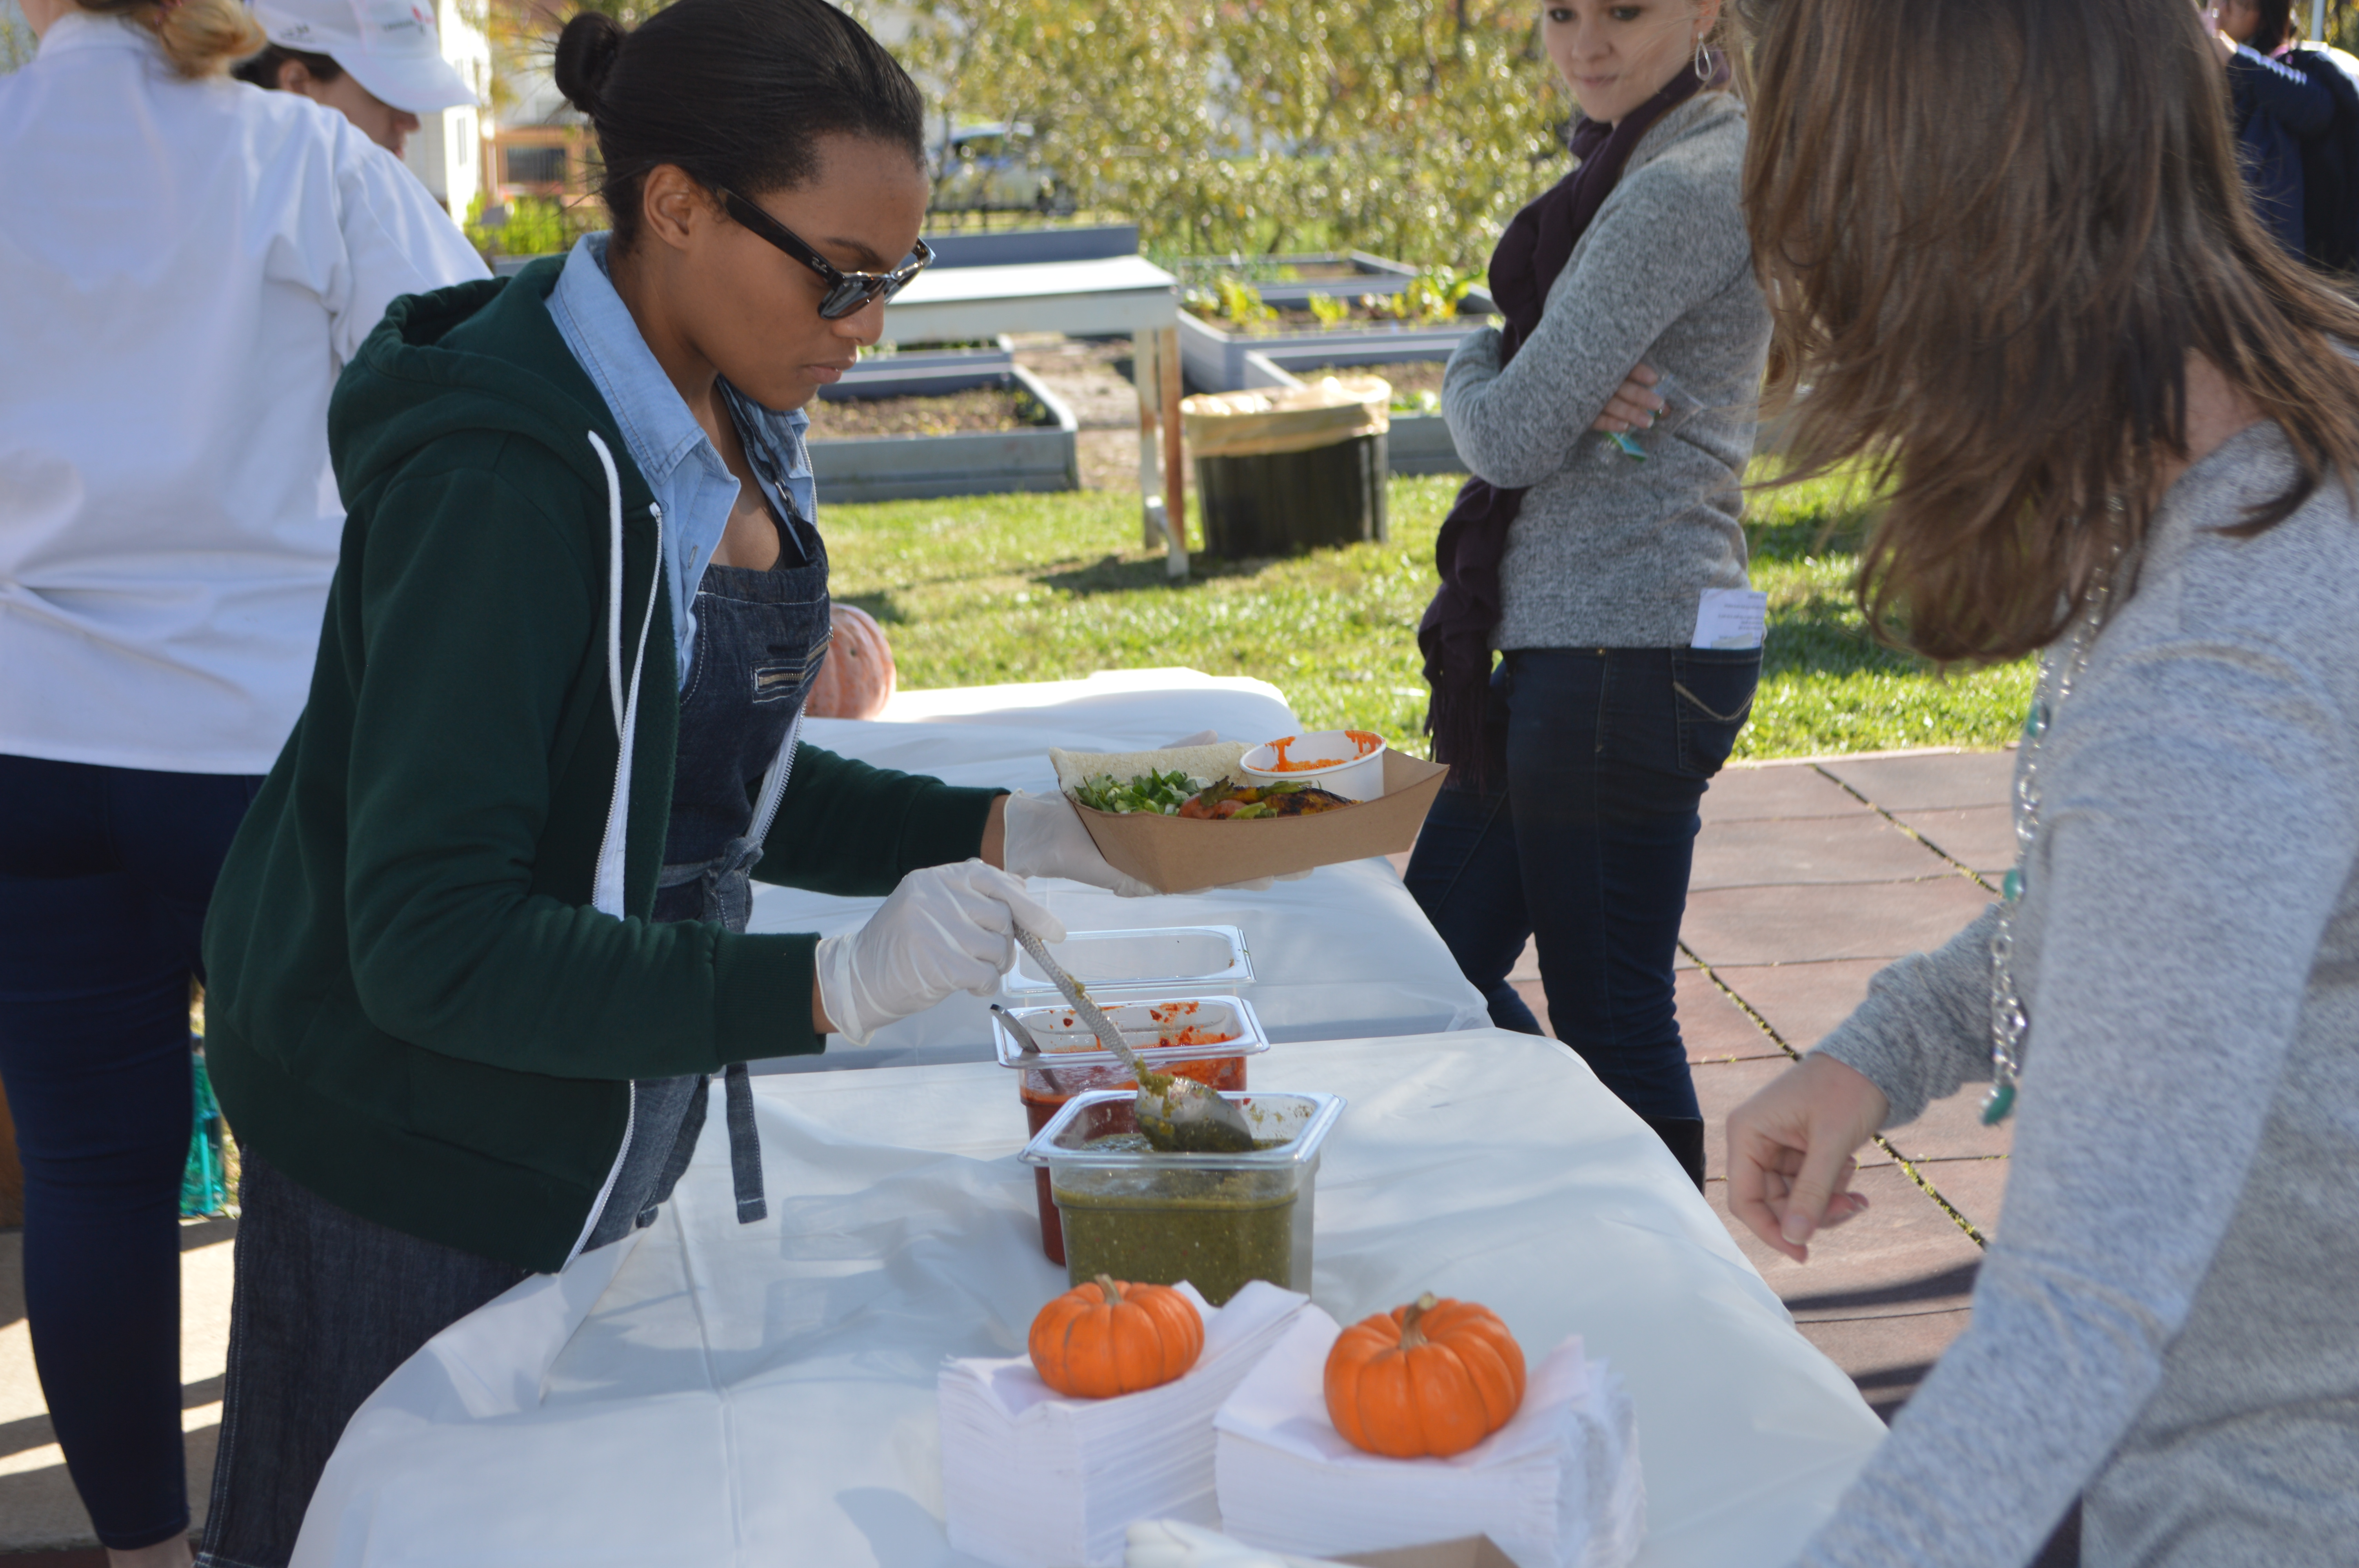 SLU garden event to promote food day